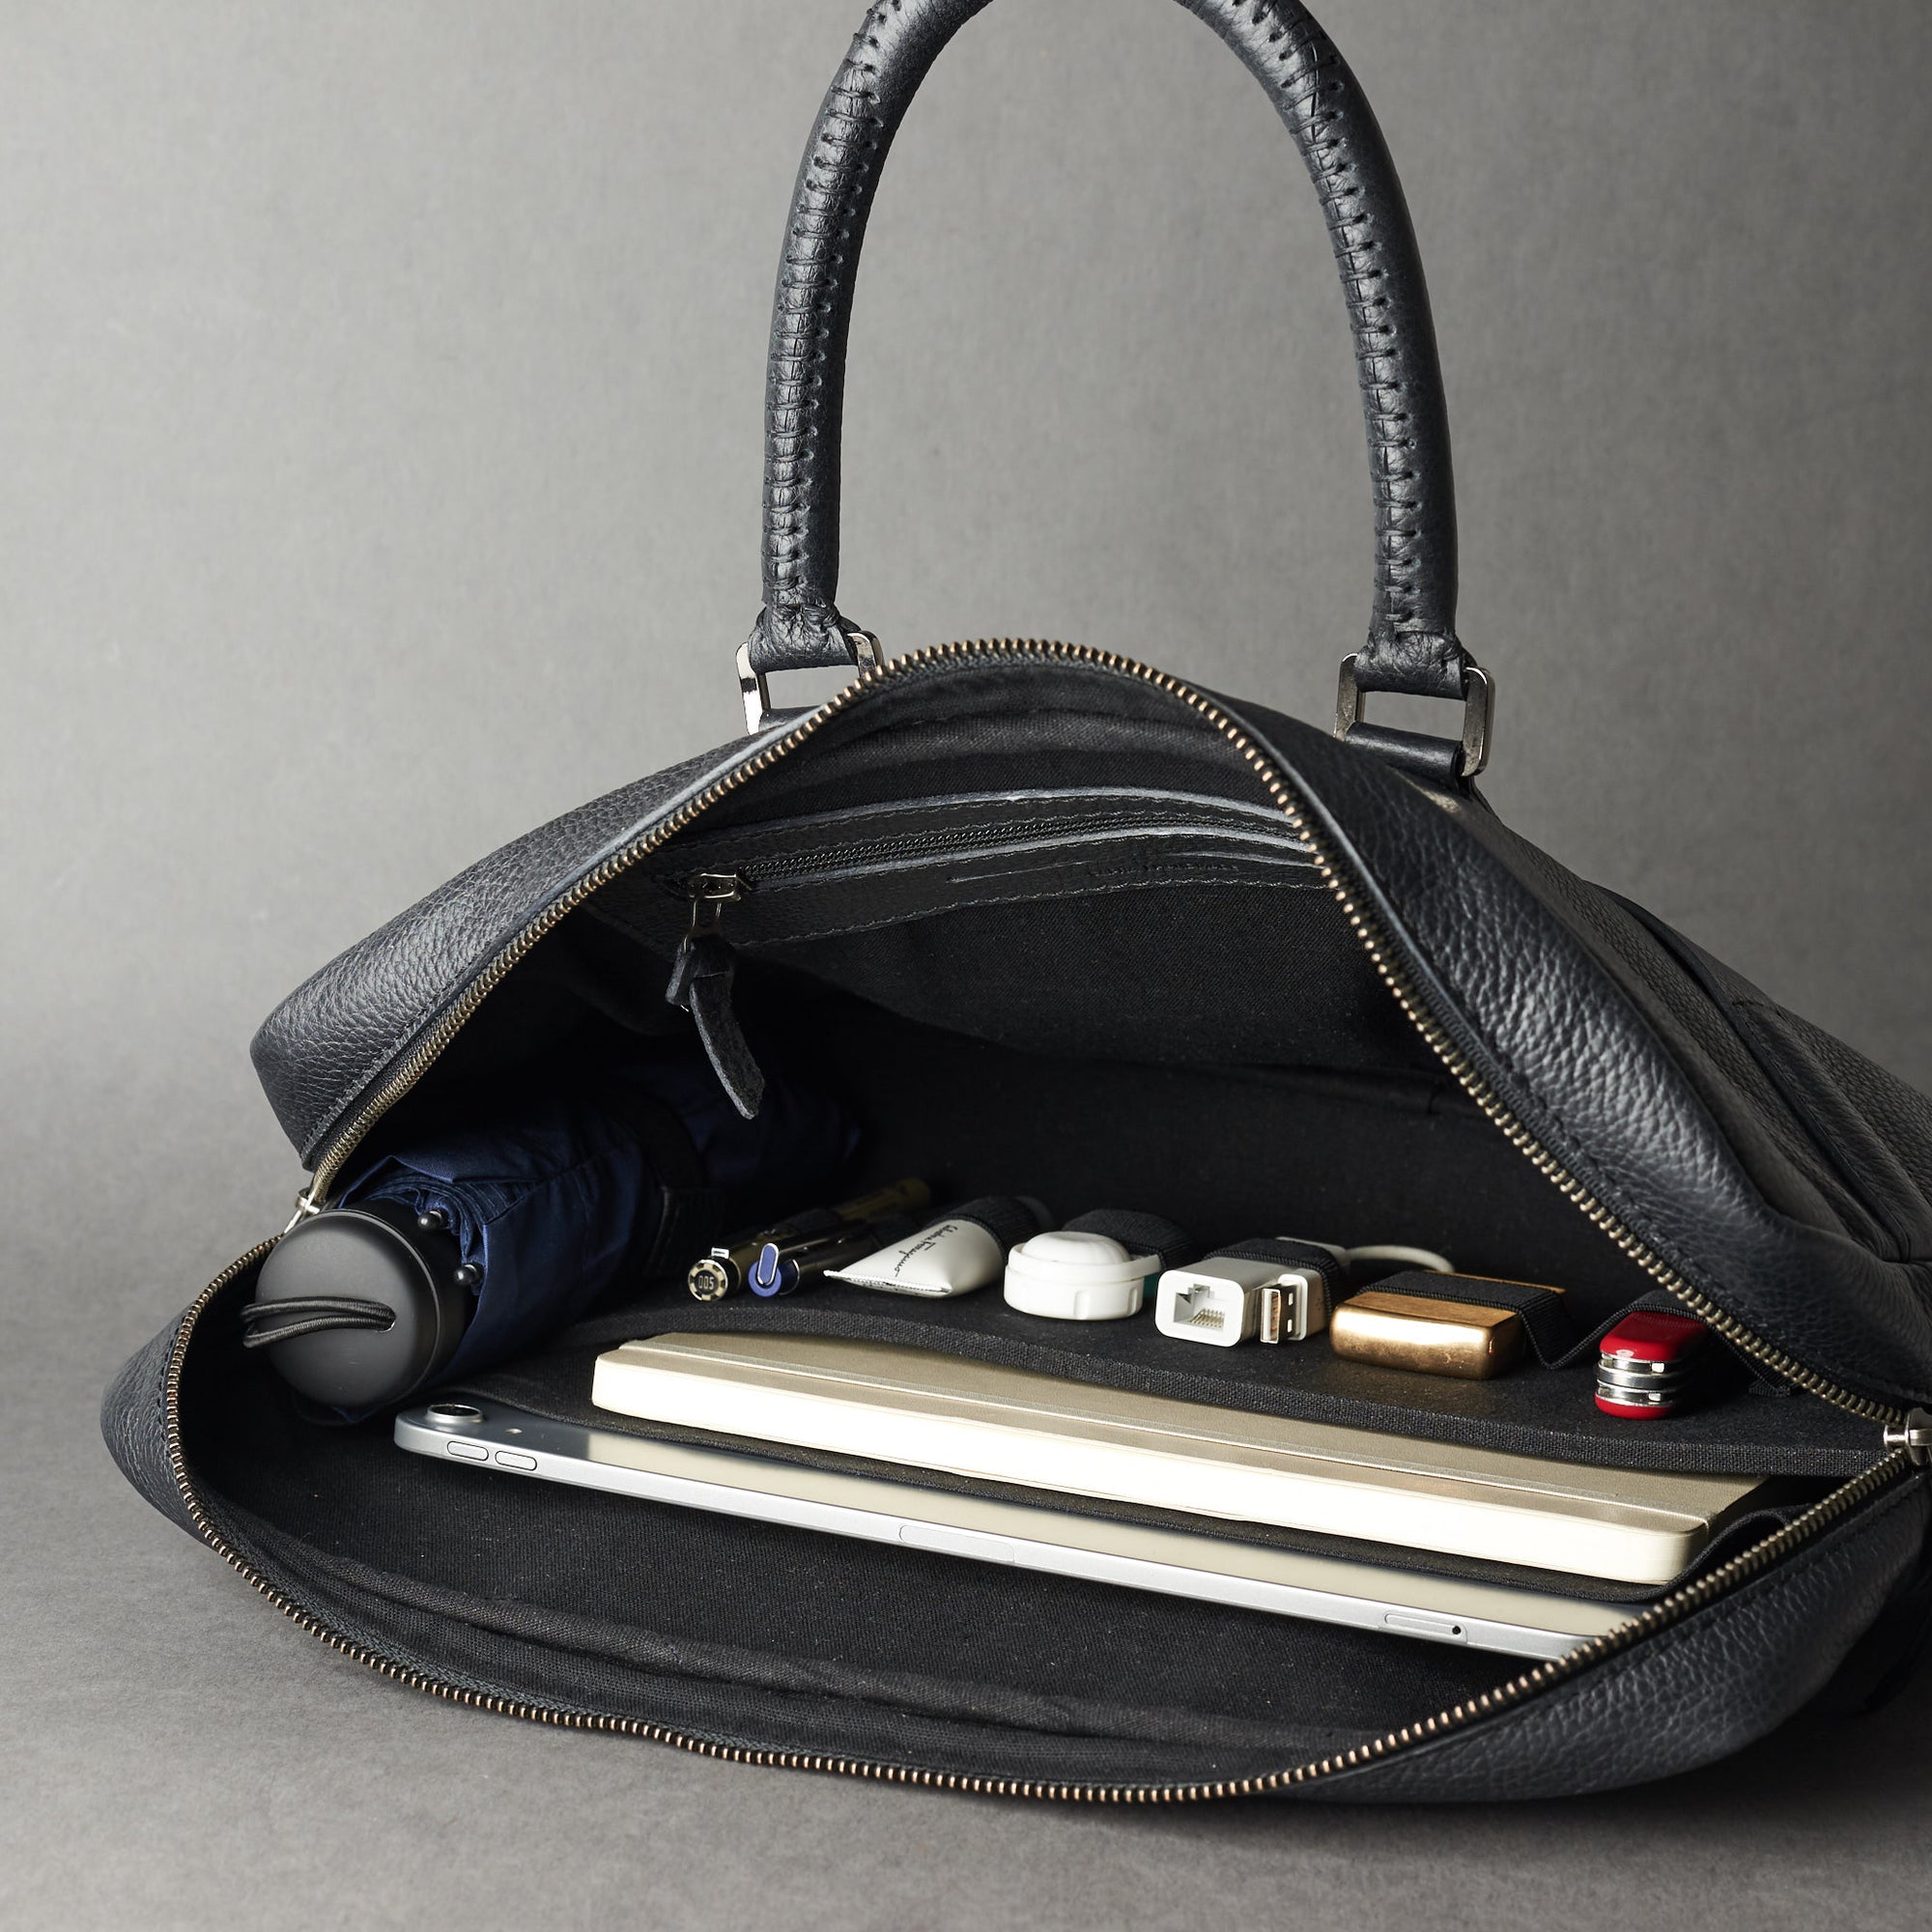 Style view, model holding bussiness document portfolio bag .Black leather briefcase laptop bag for men. Gazeli laptop briefcase by Capra Leather.